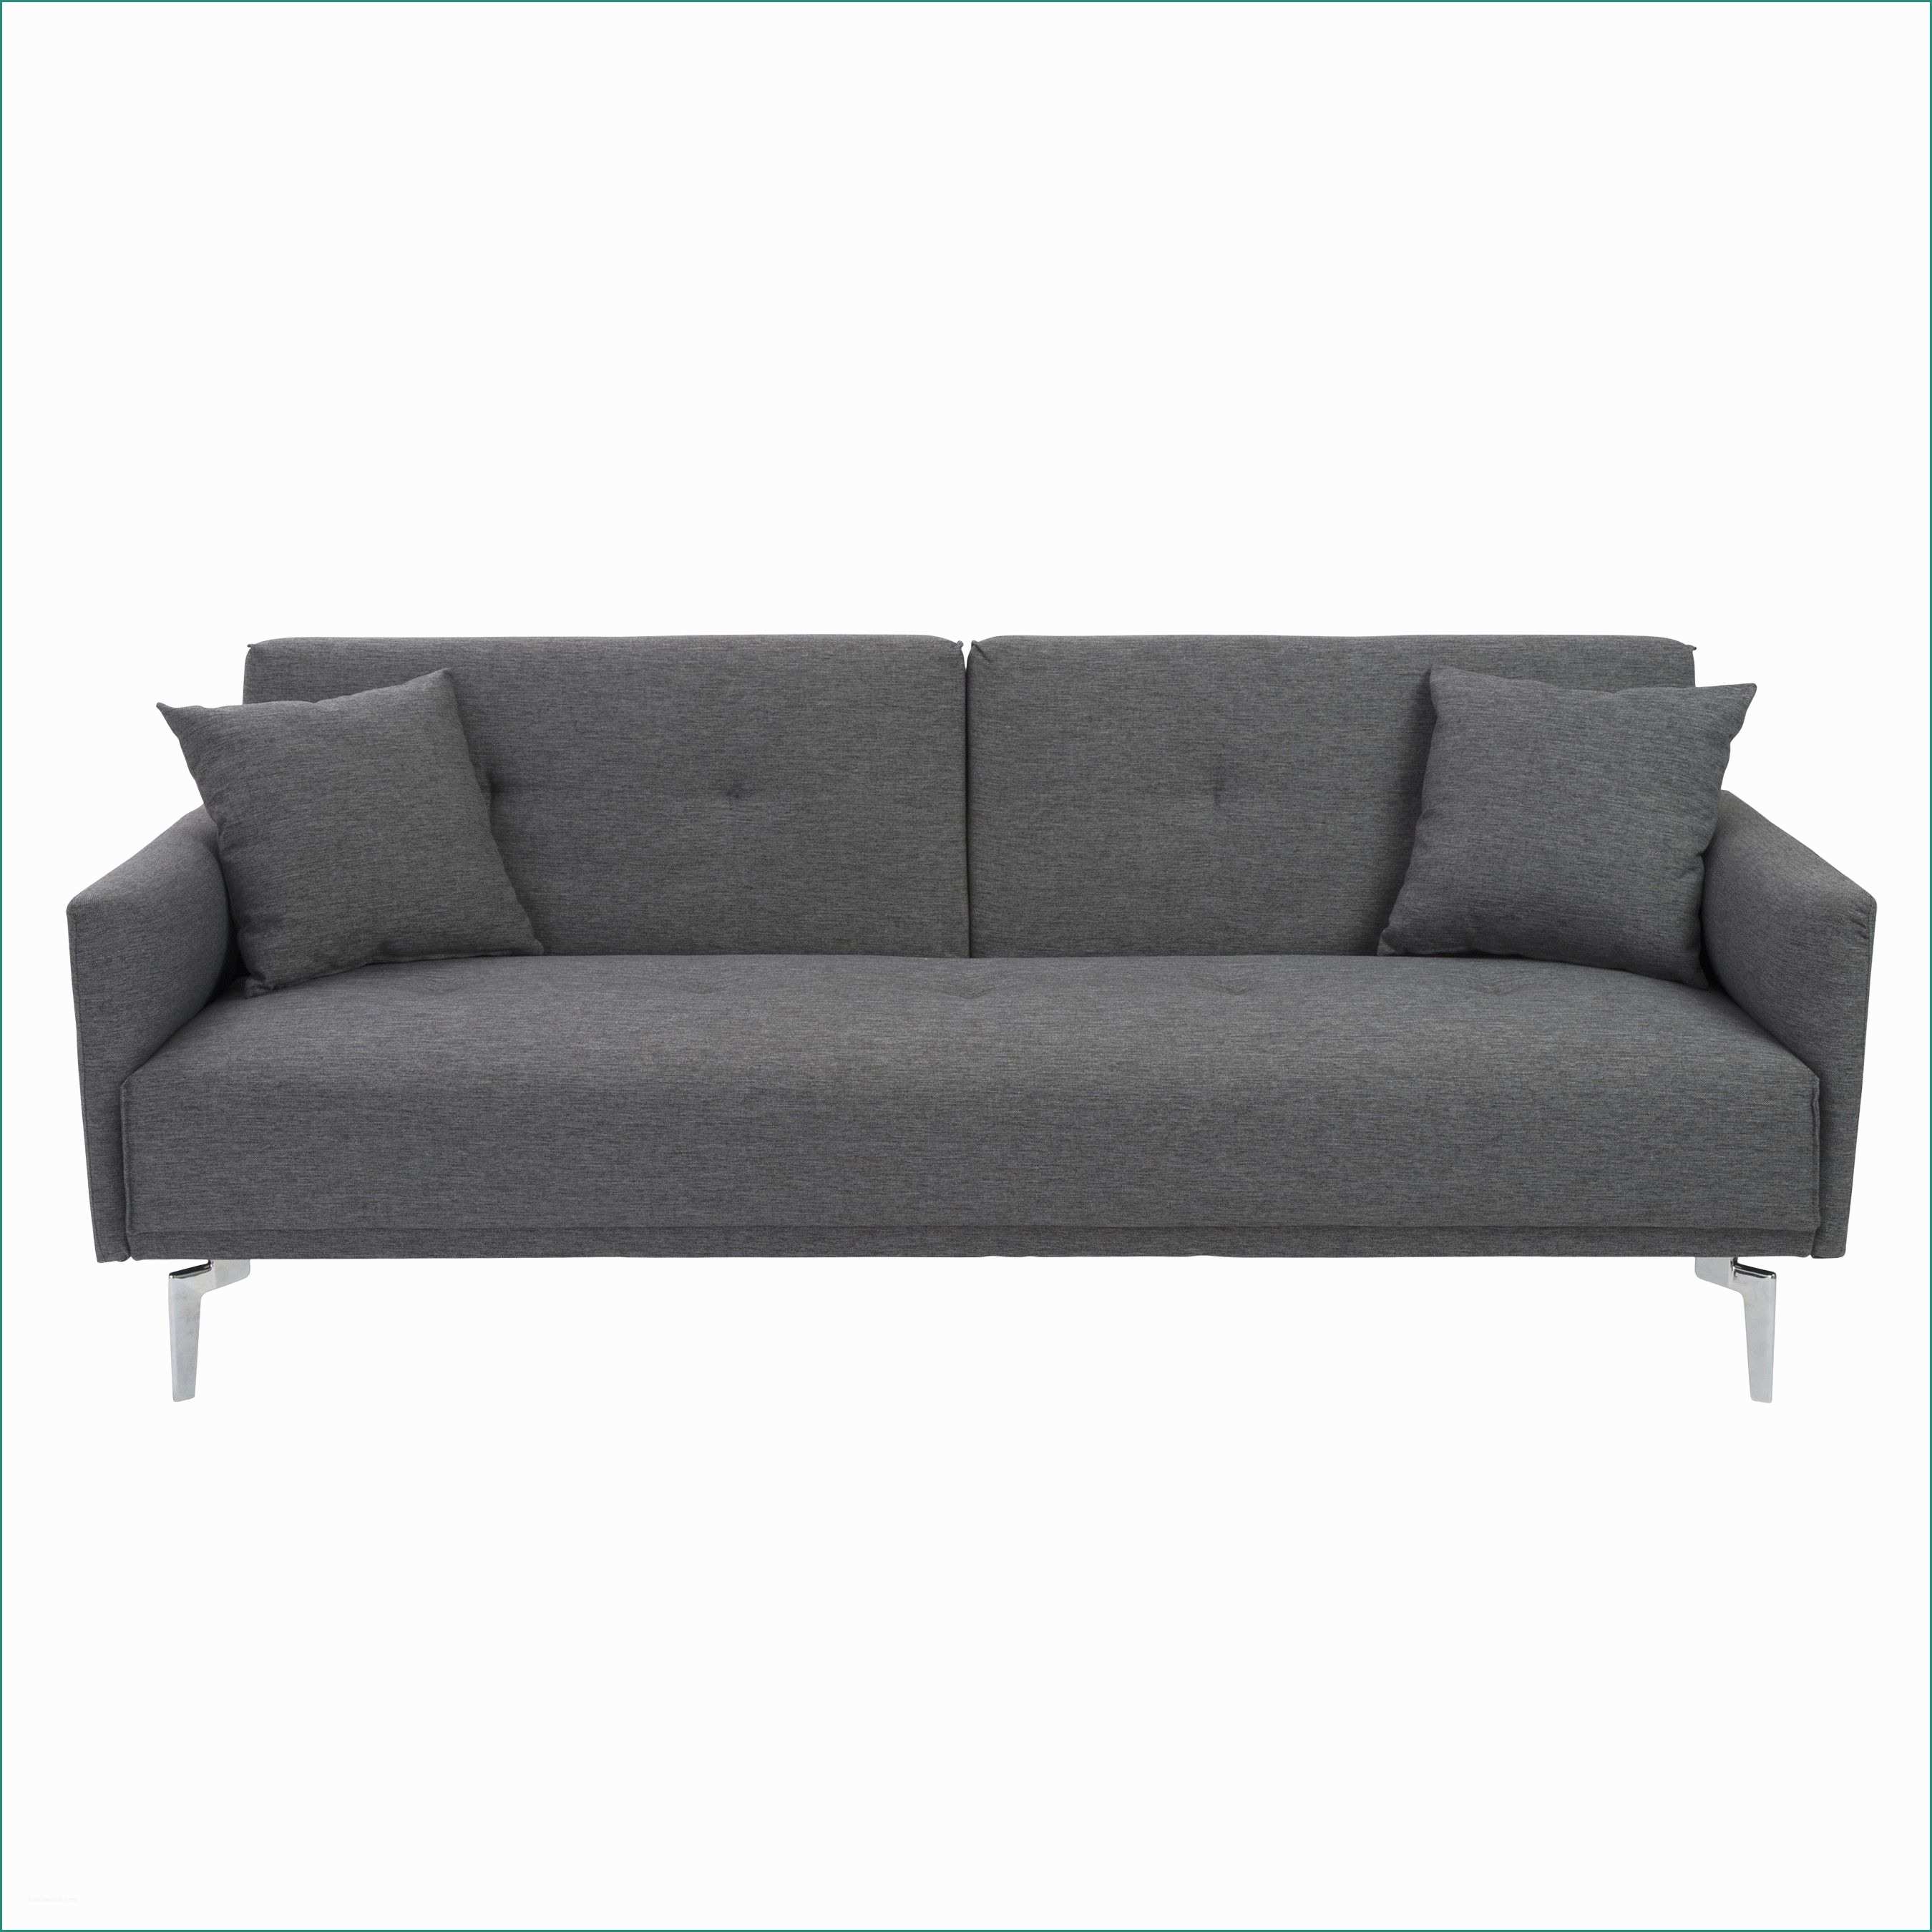 Outlet Arredamento Parma E Lafau sofa Bed with Armrest Dark Gray